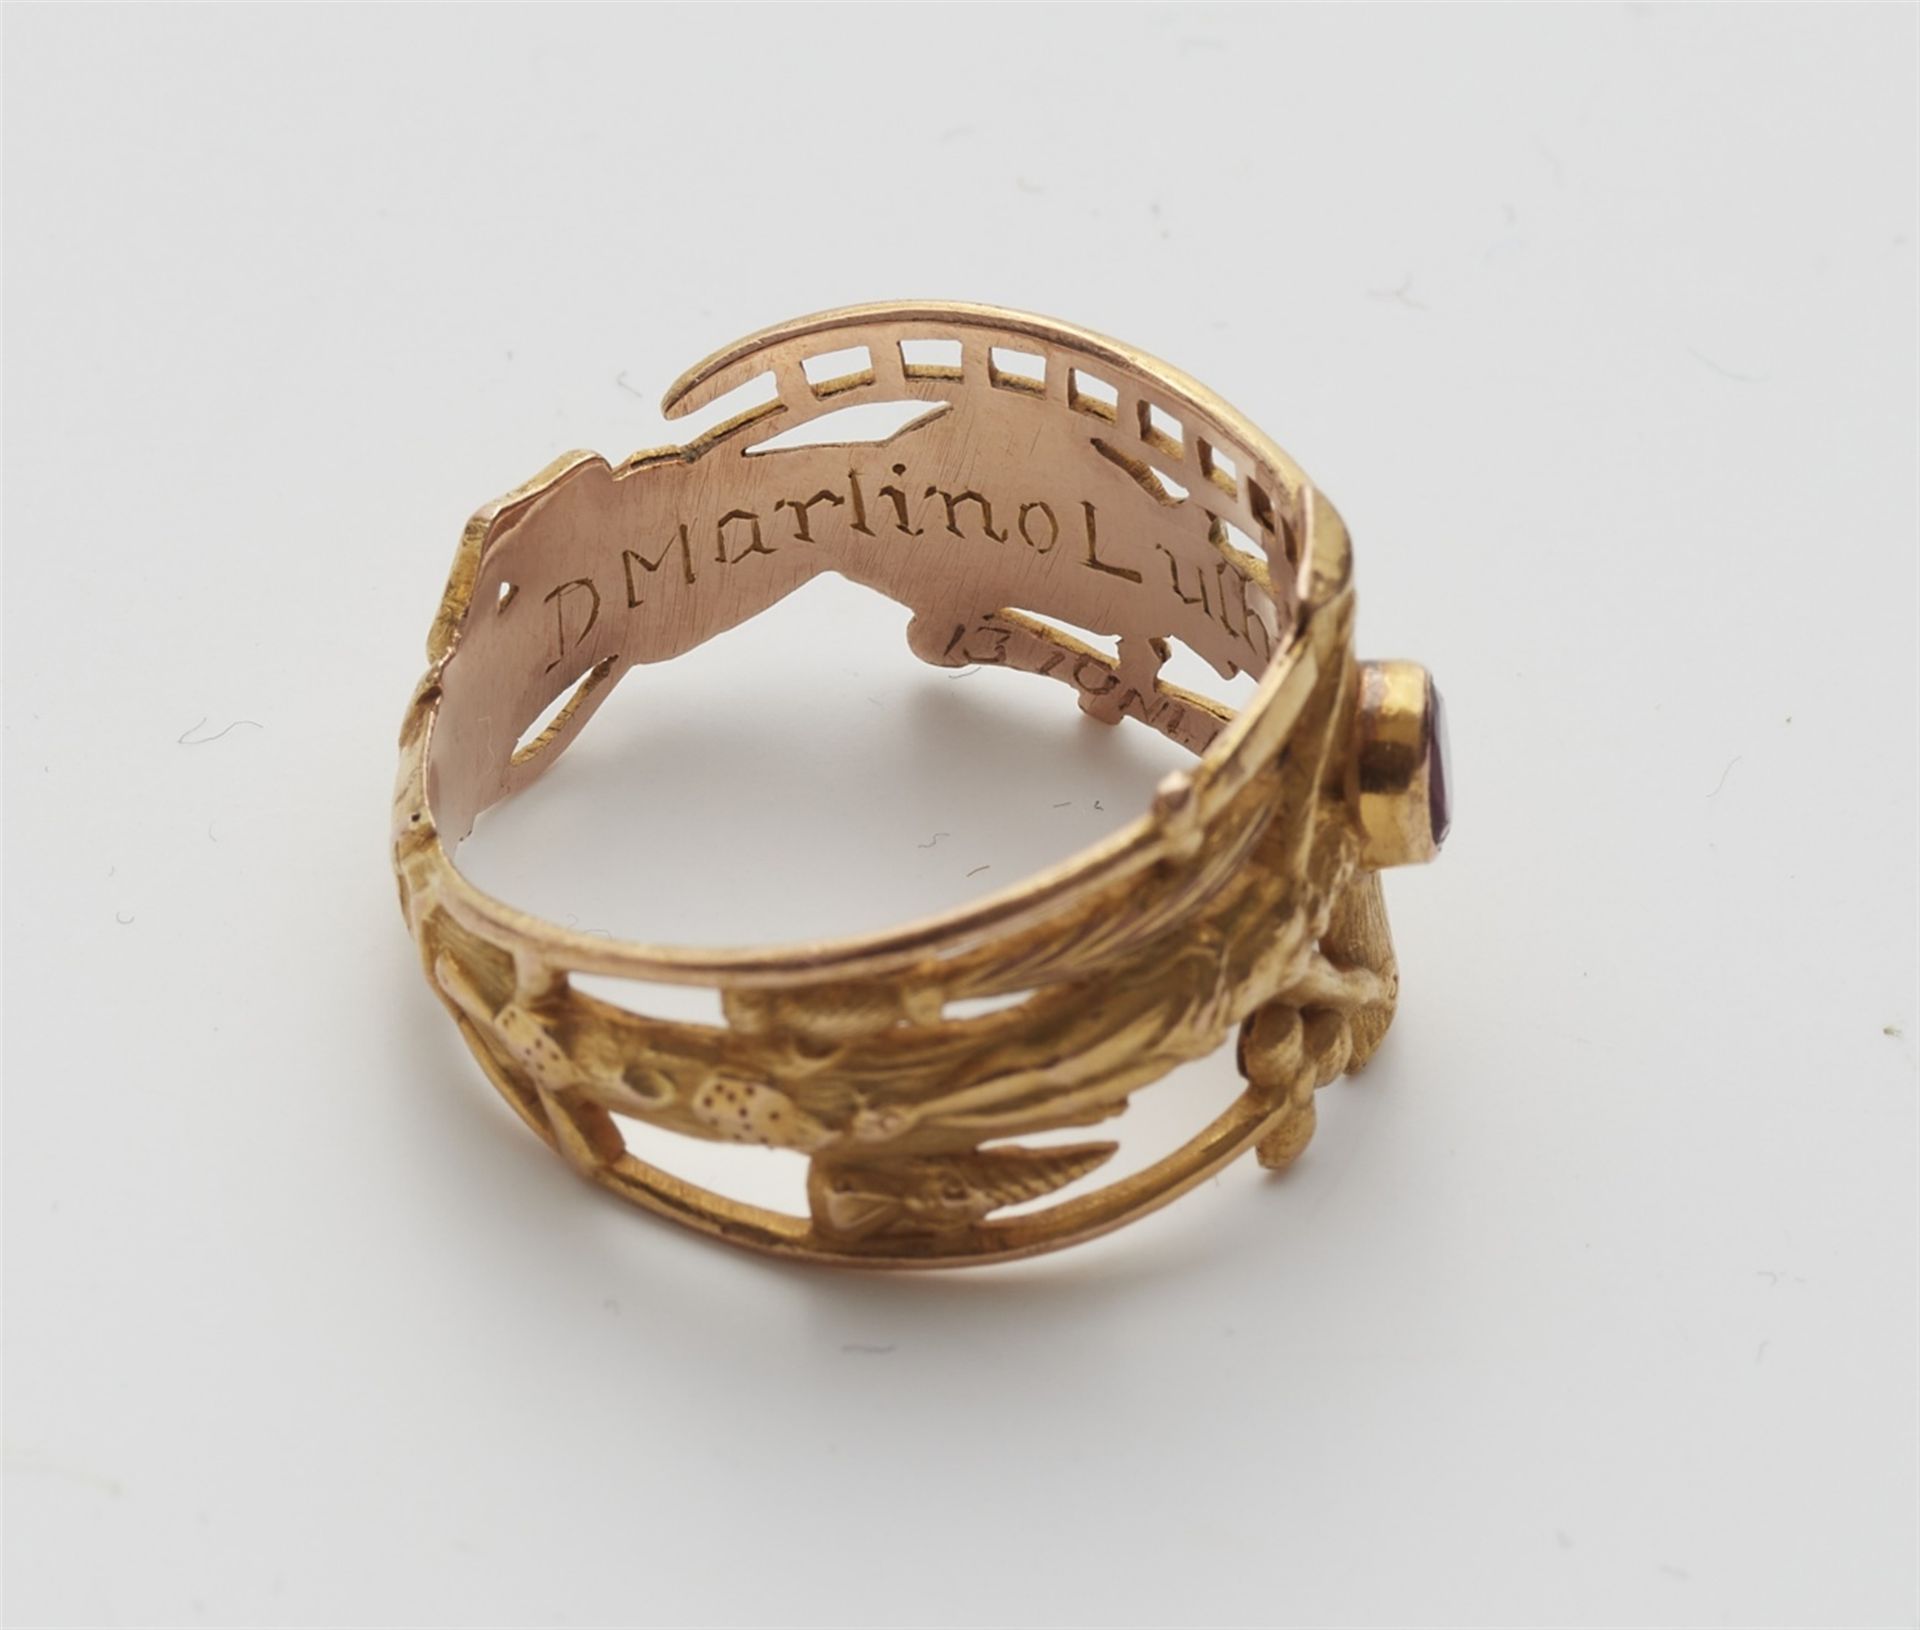 The engagement ring of Katharina von Bora - Image 4 of 4